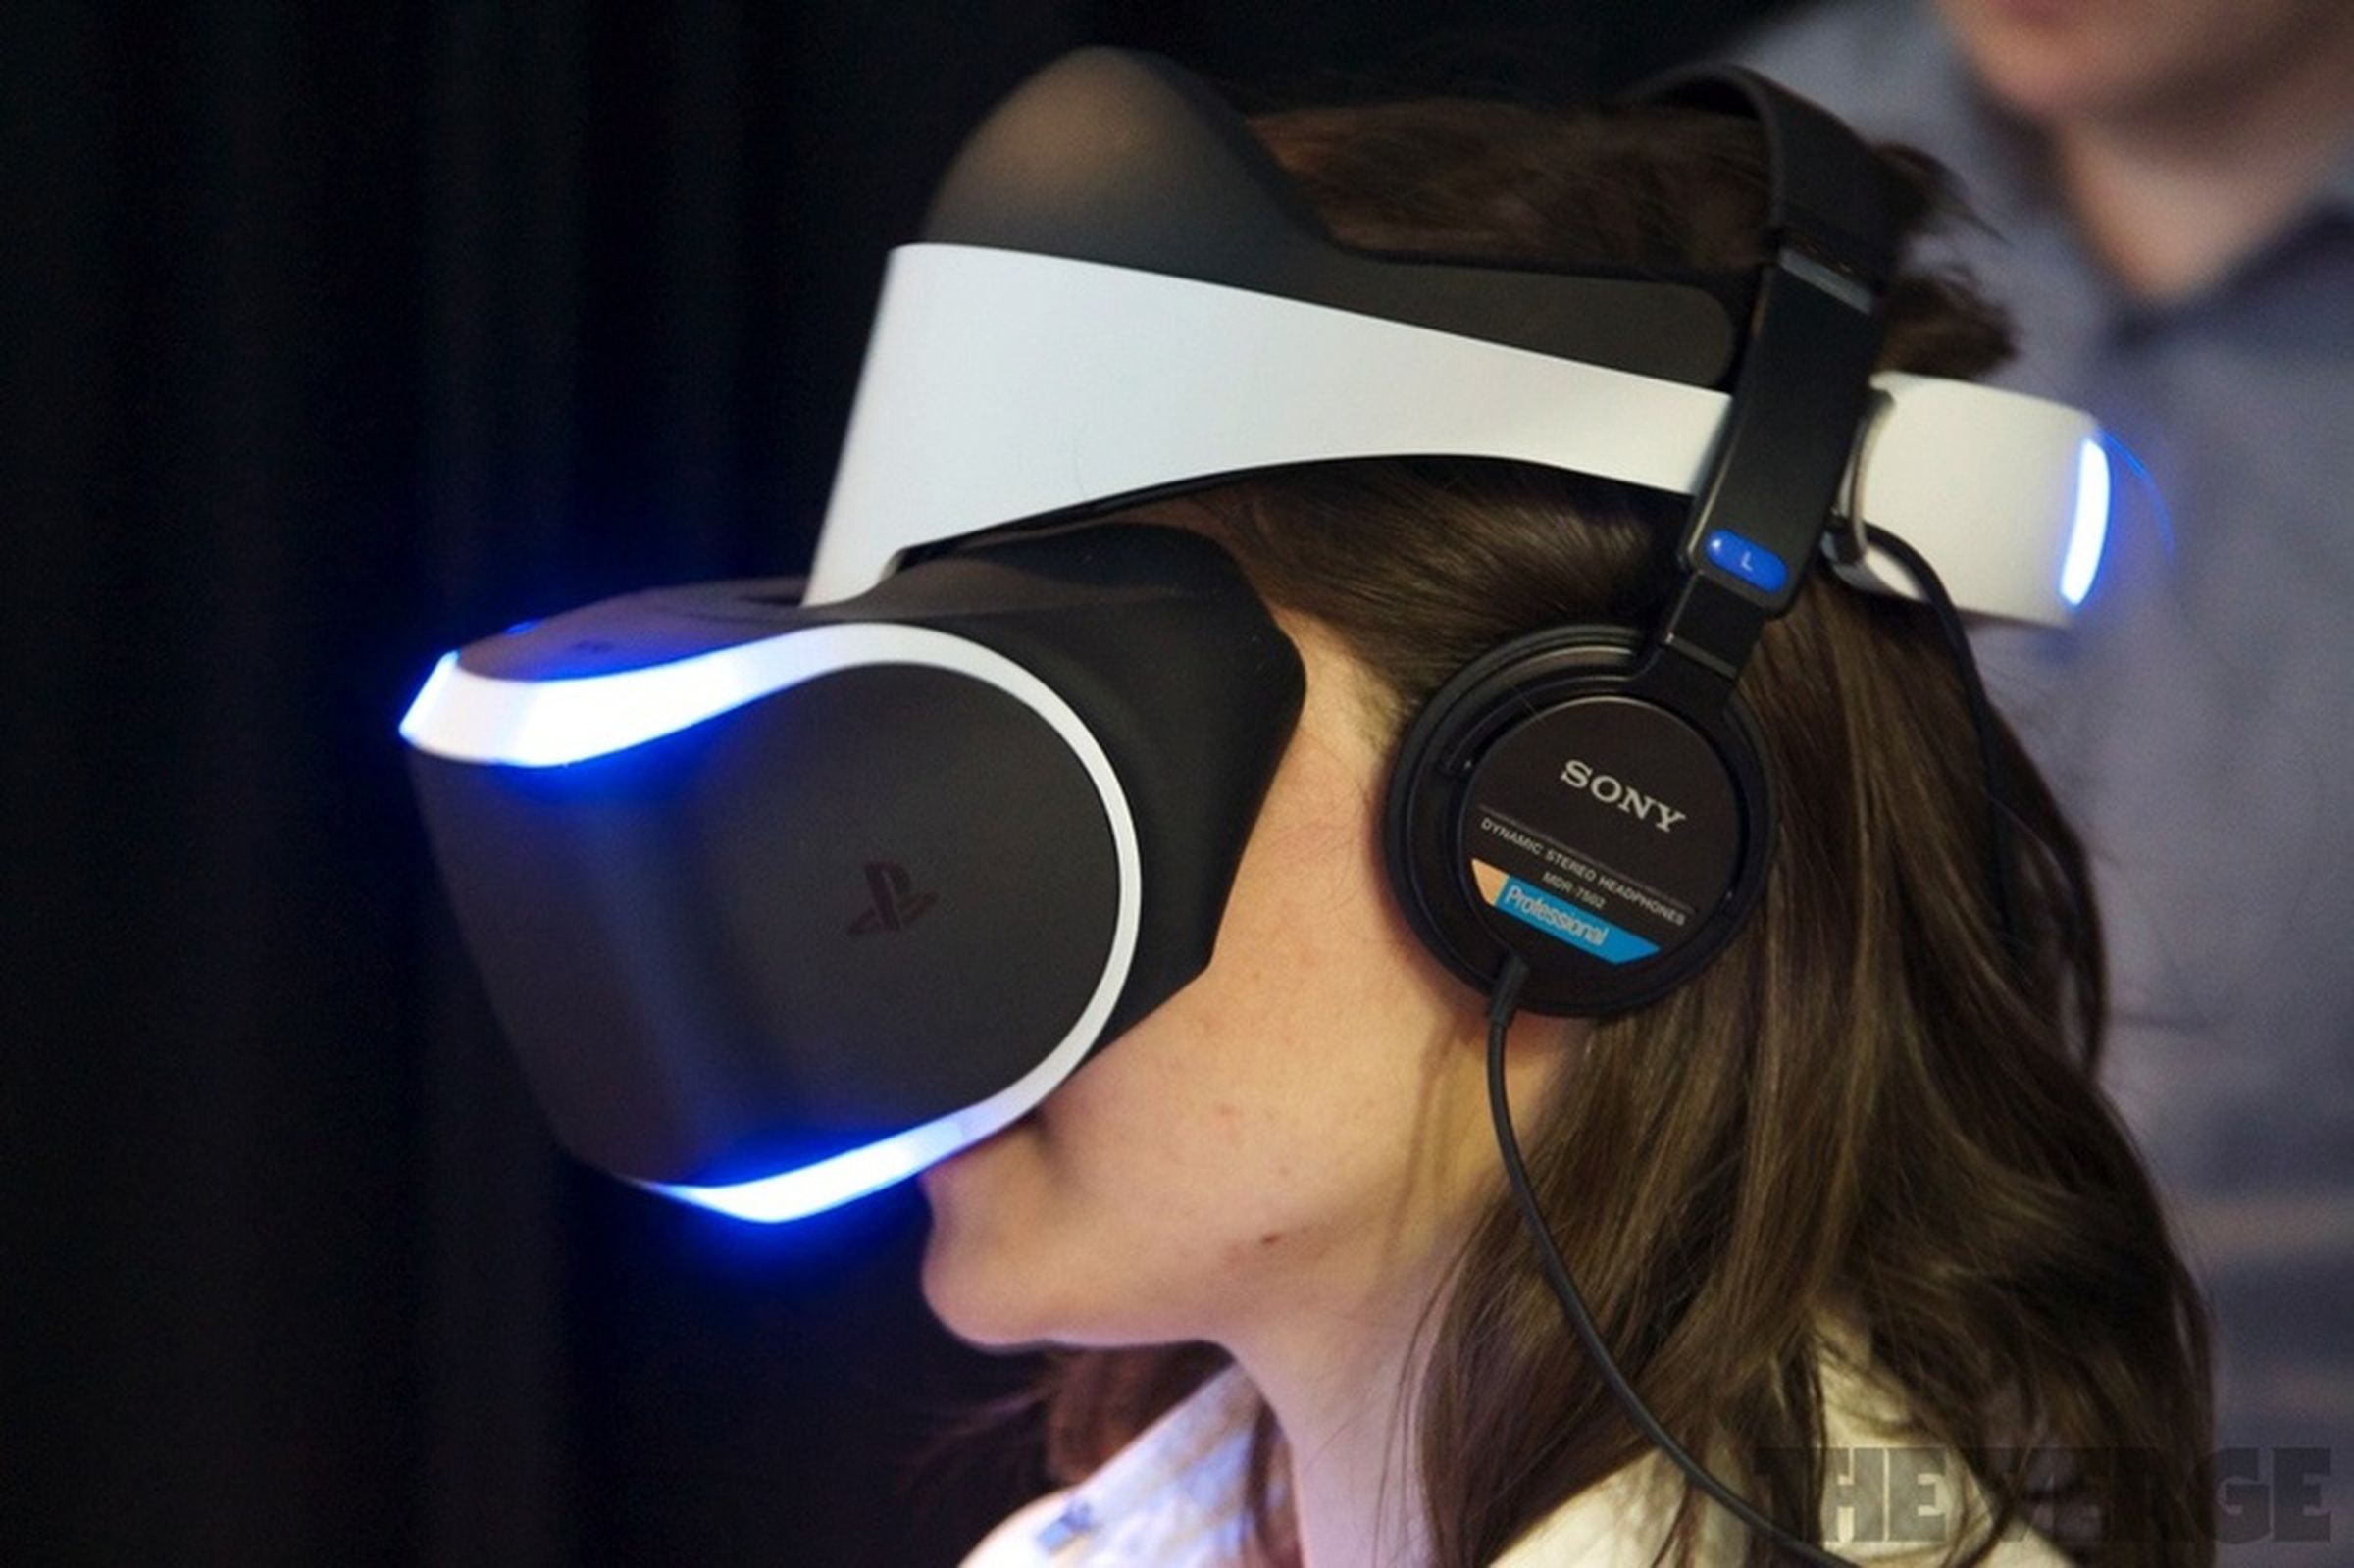 Sony Project Morpheus virtual reality headset photos